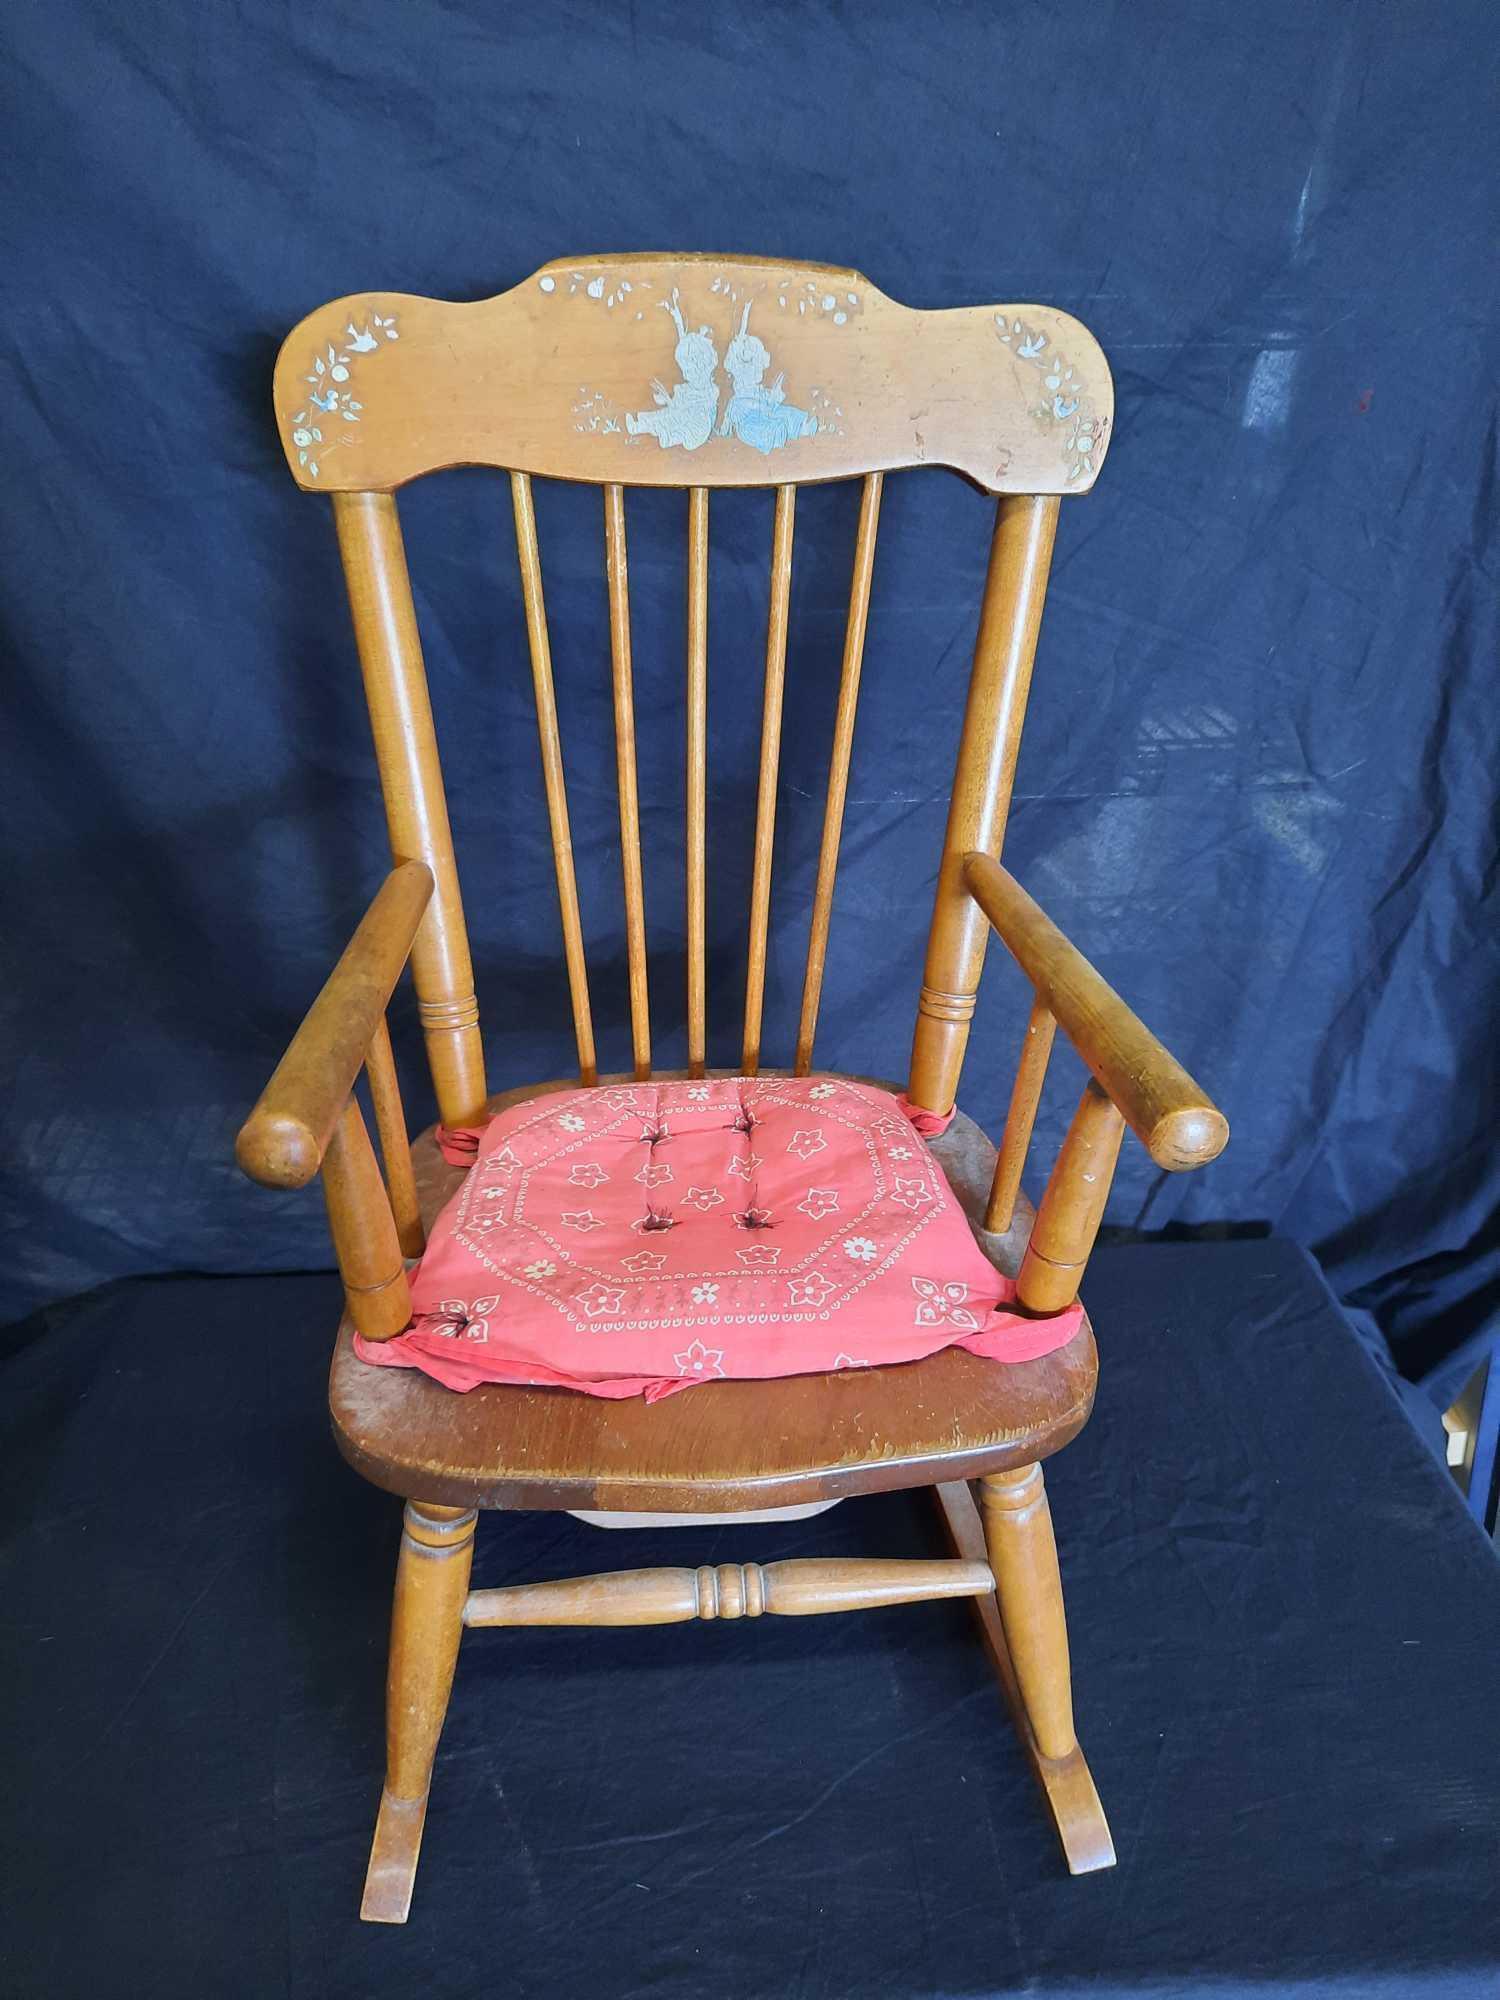 Oak hill co. miniature wooden rocking chair